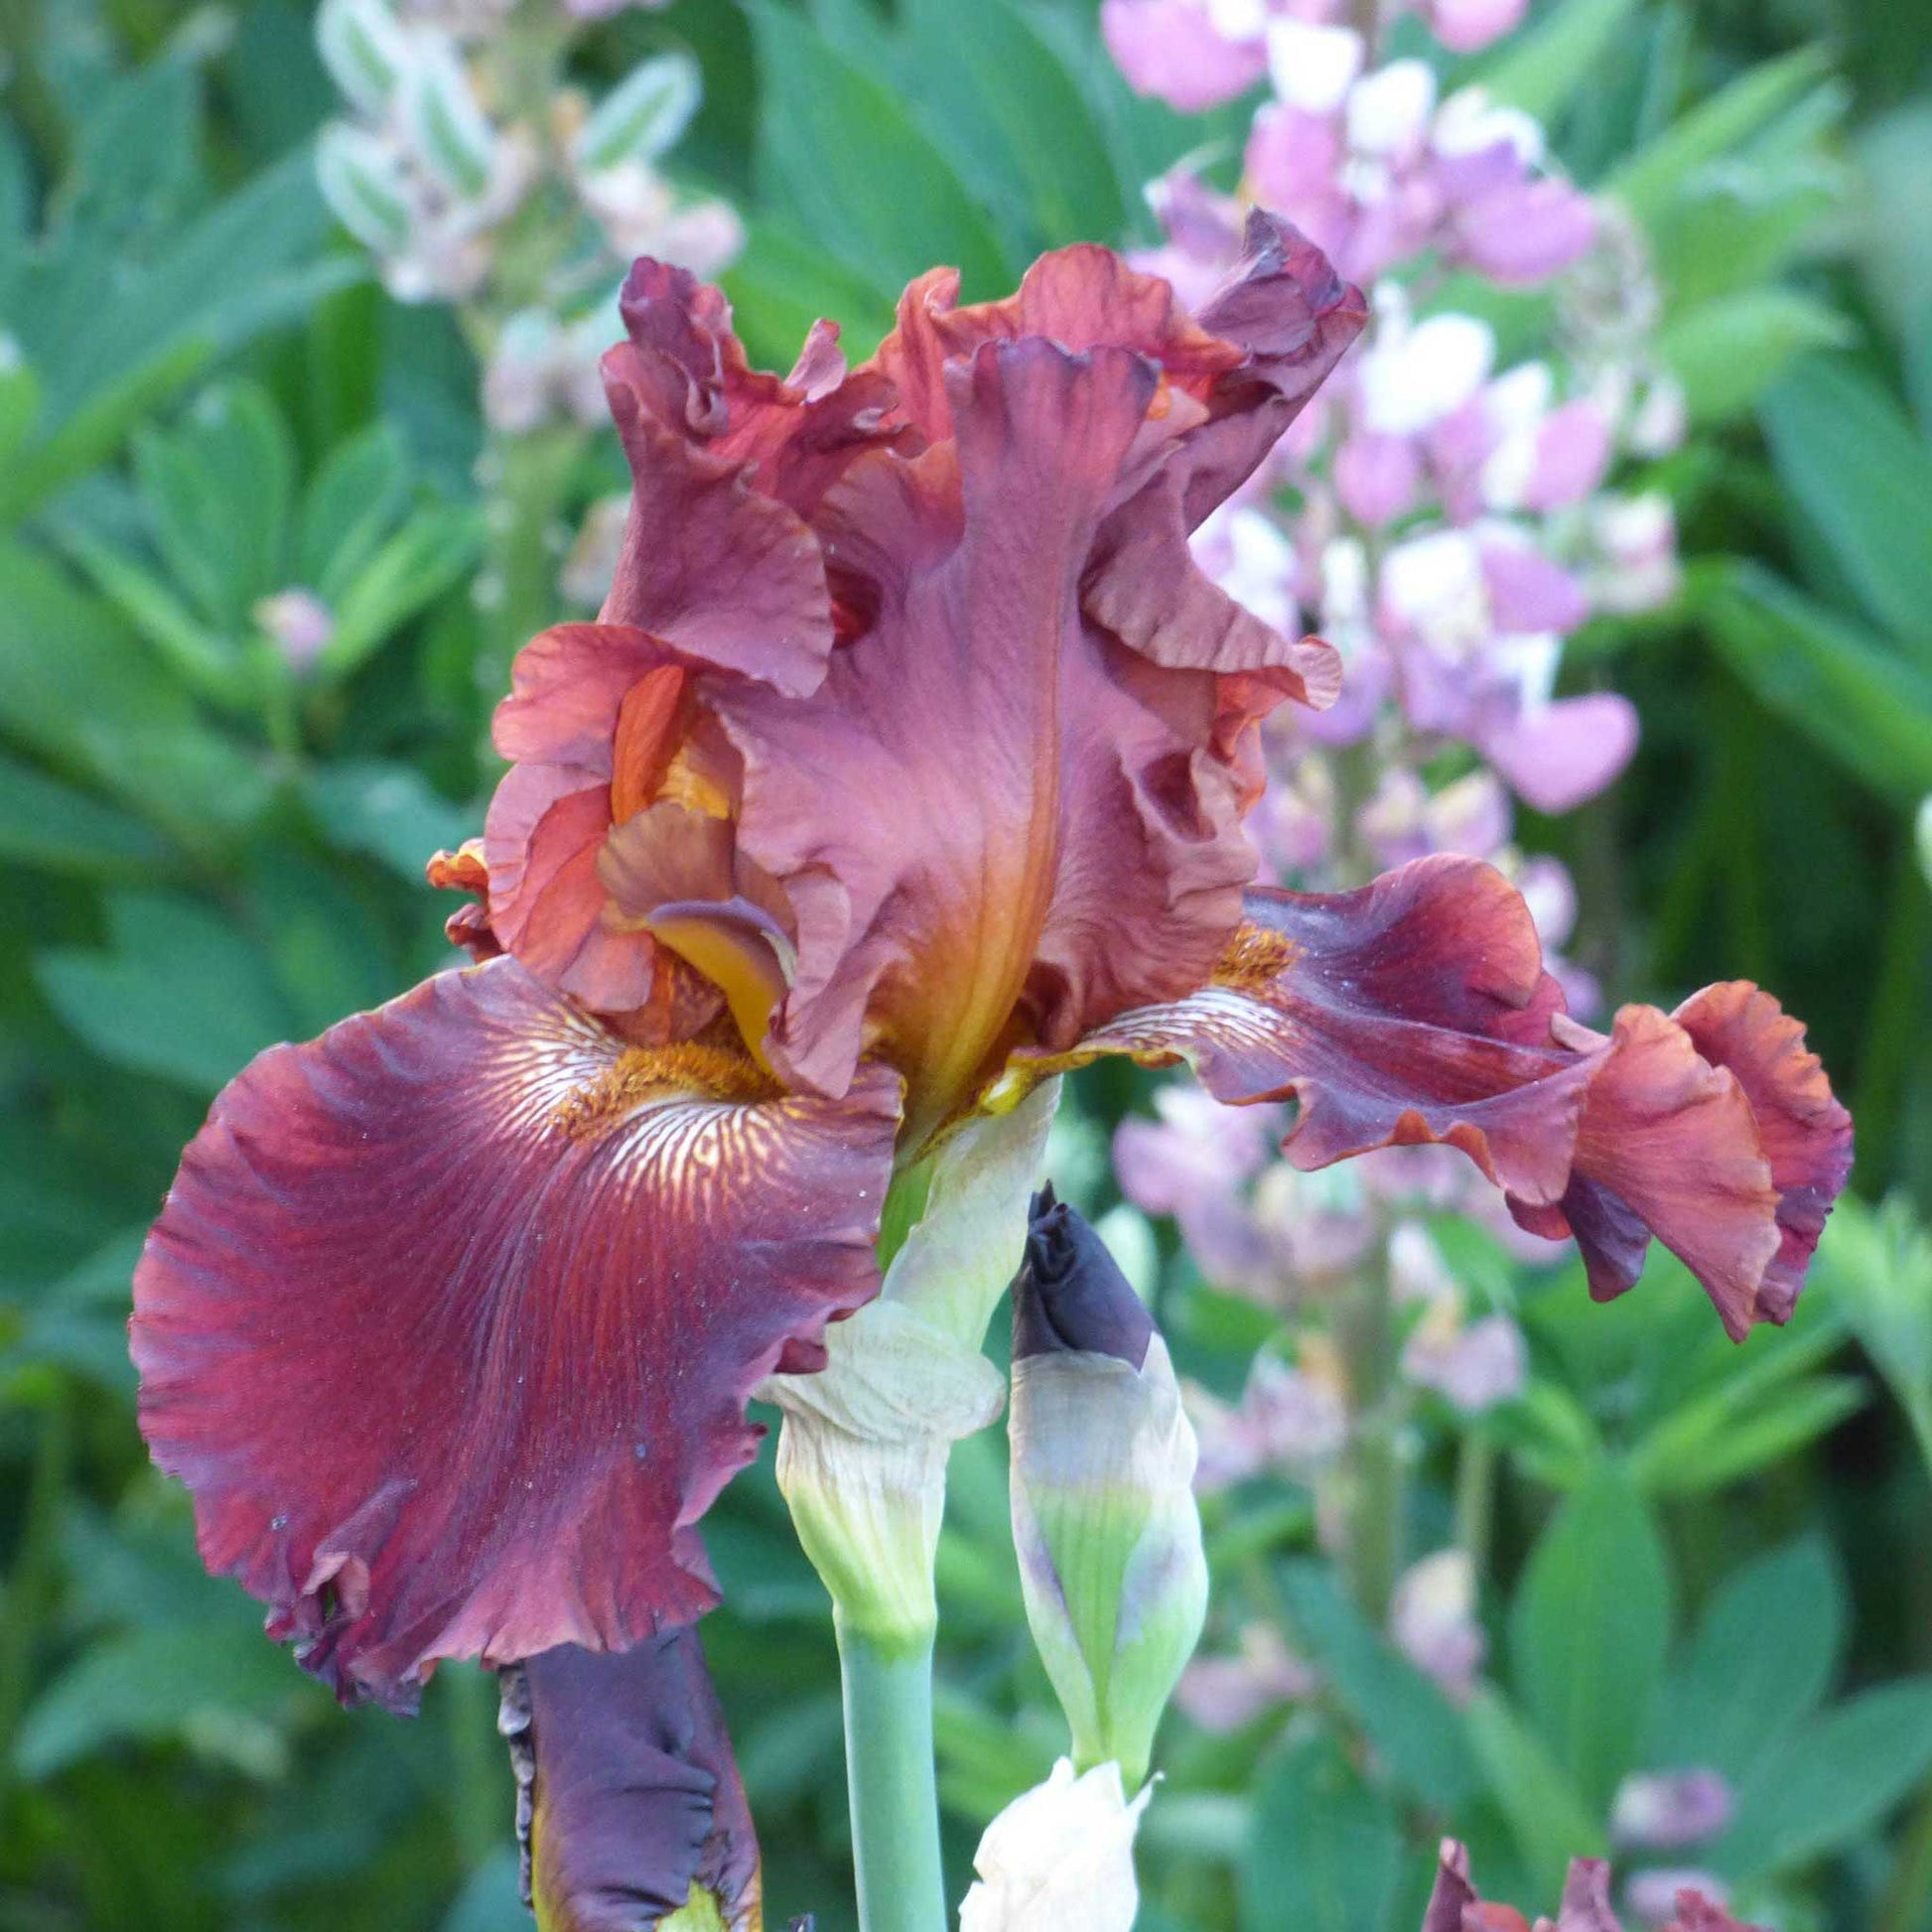 bearded iris - 45 days of red bloom